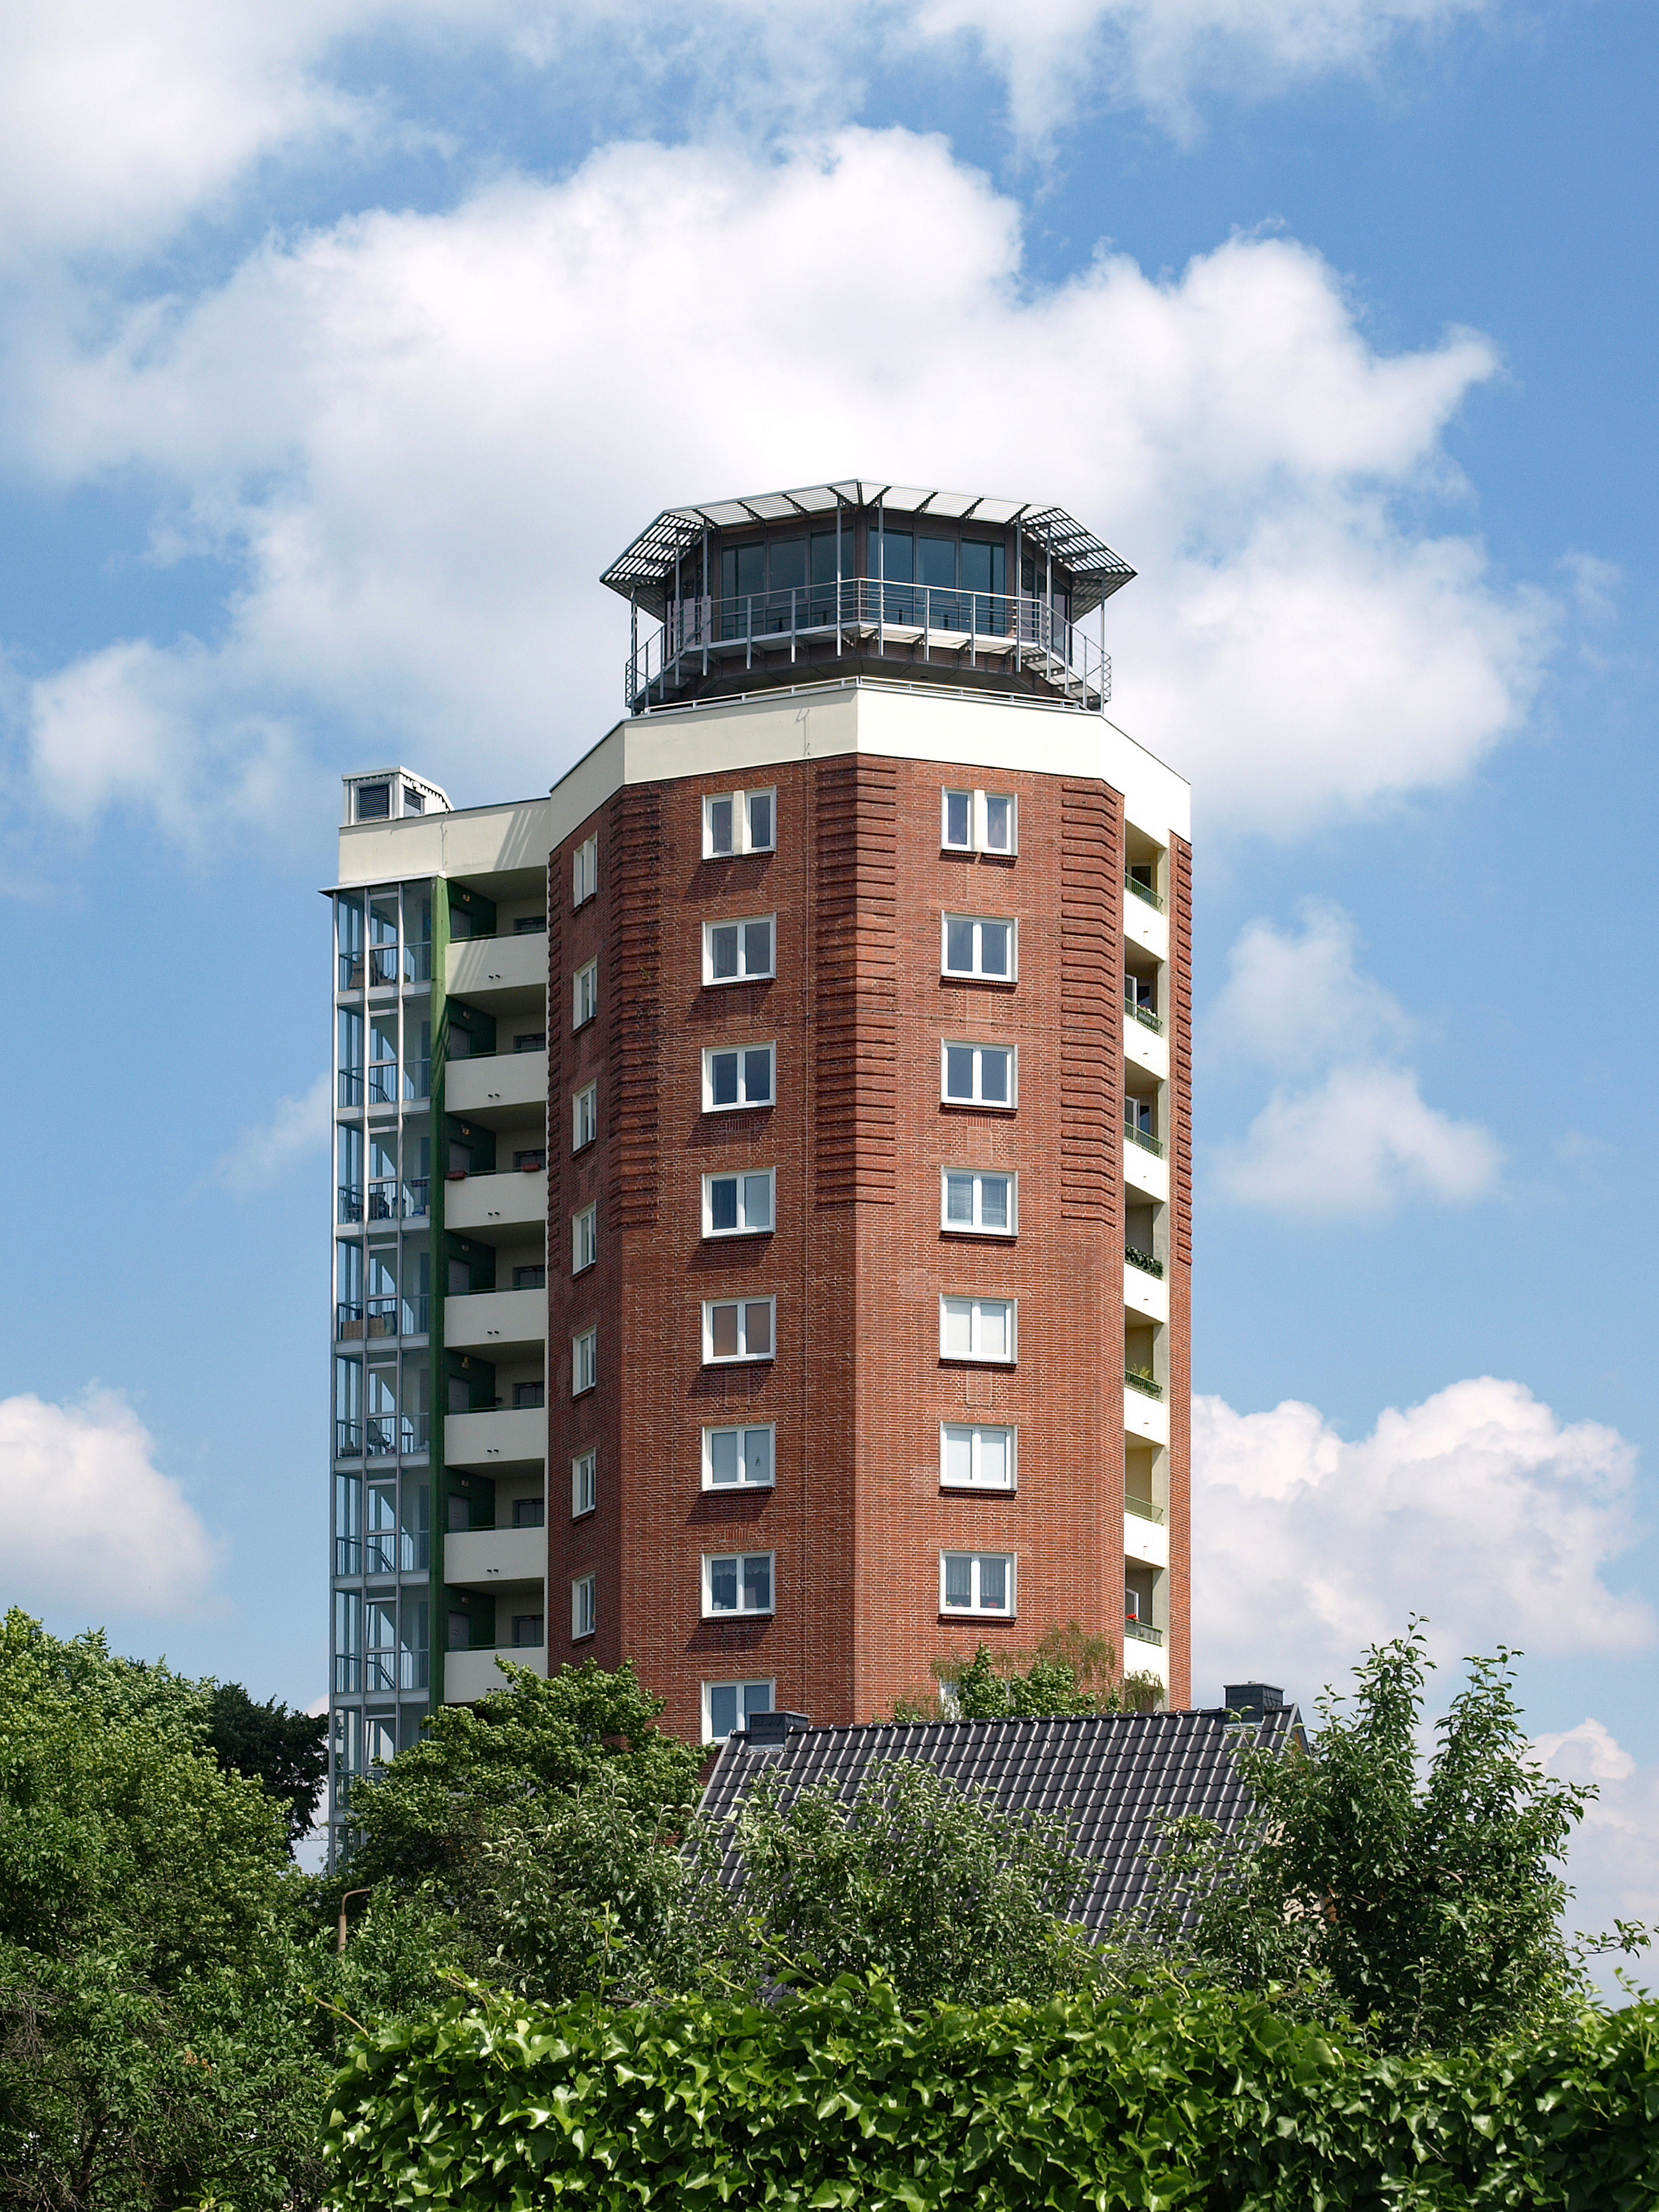 File:Podersdorf am See, der Leuchtturm.jpg - Wikimedia Commons